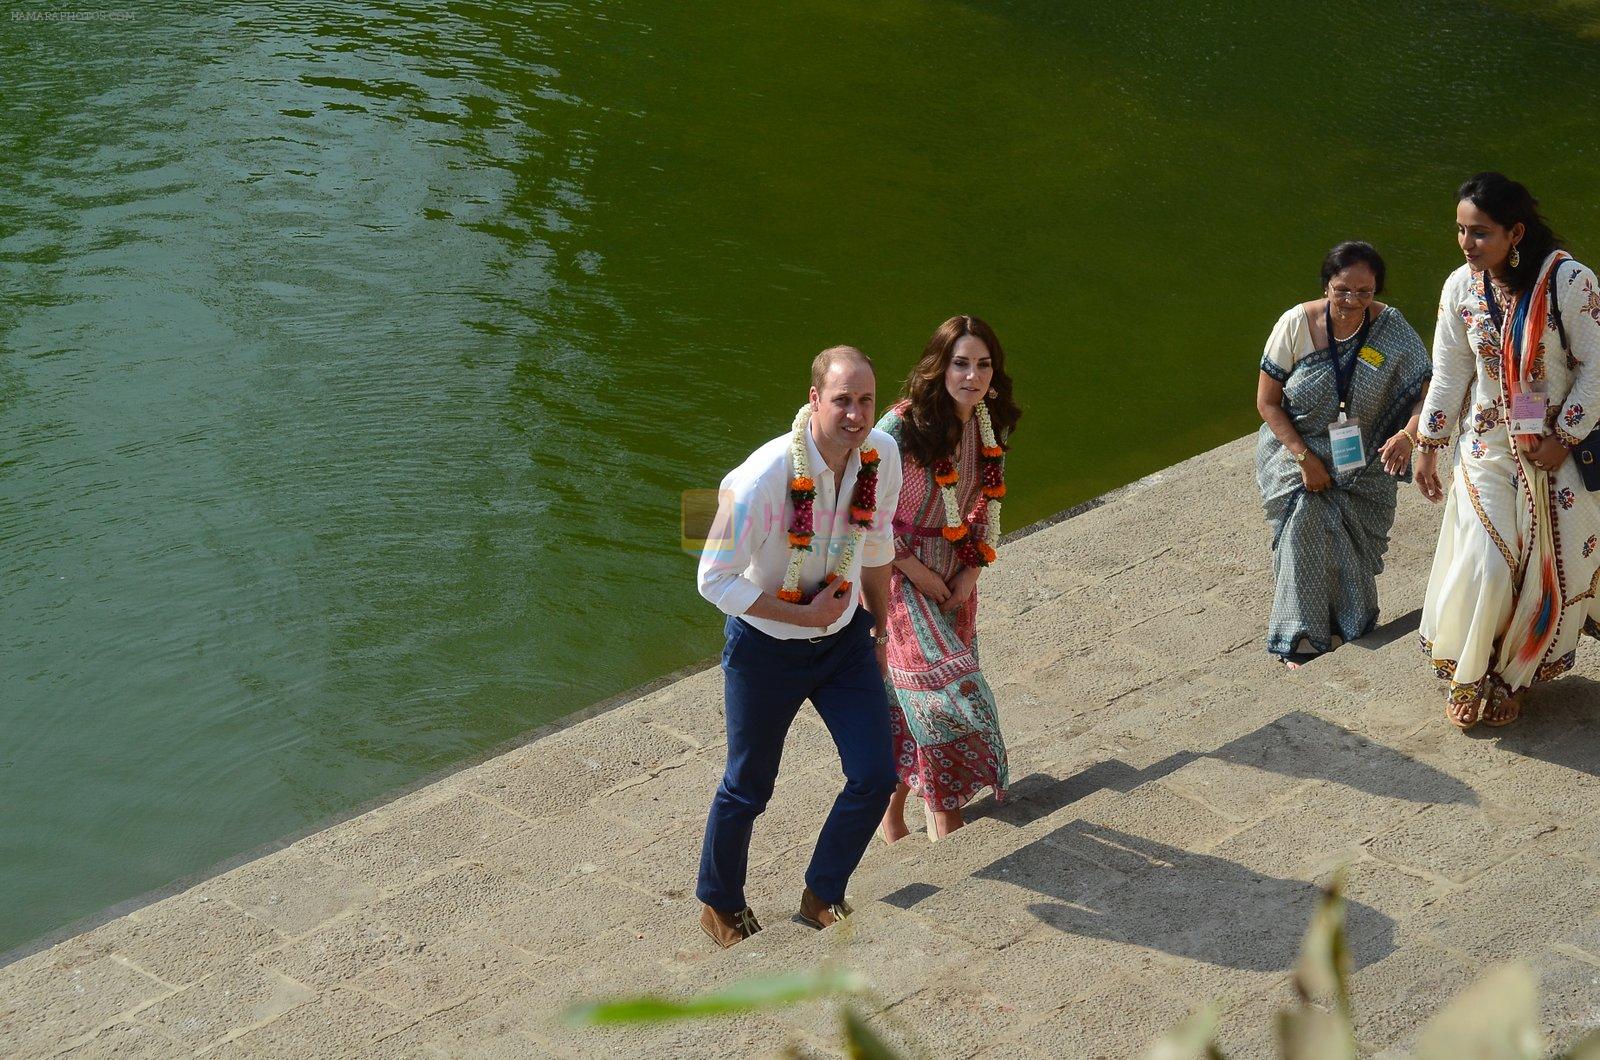 Prince William & Kate Middleton in Mumbai on 10th April 2016